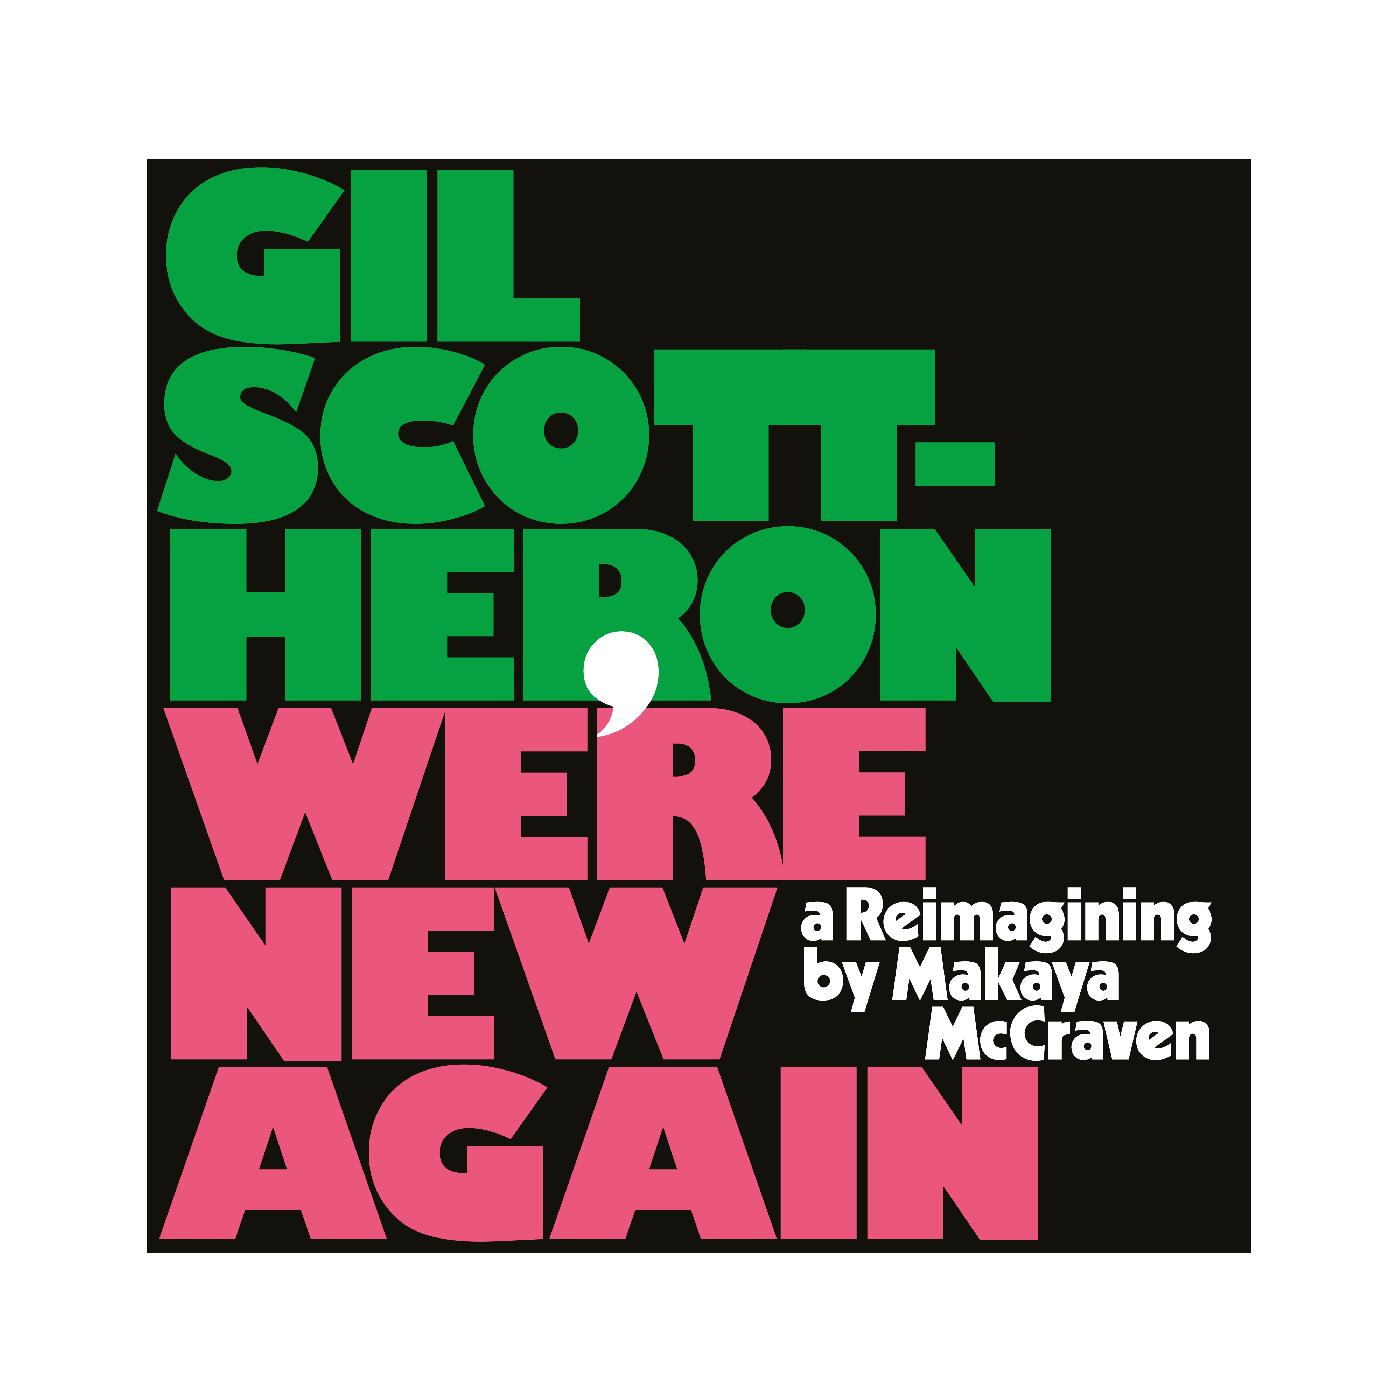 Gil Scott-Heron | We're New Again - A Reimagining by Makaya McCraven | CD